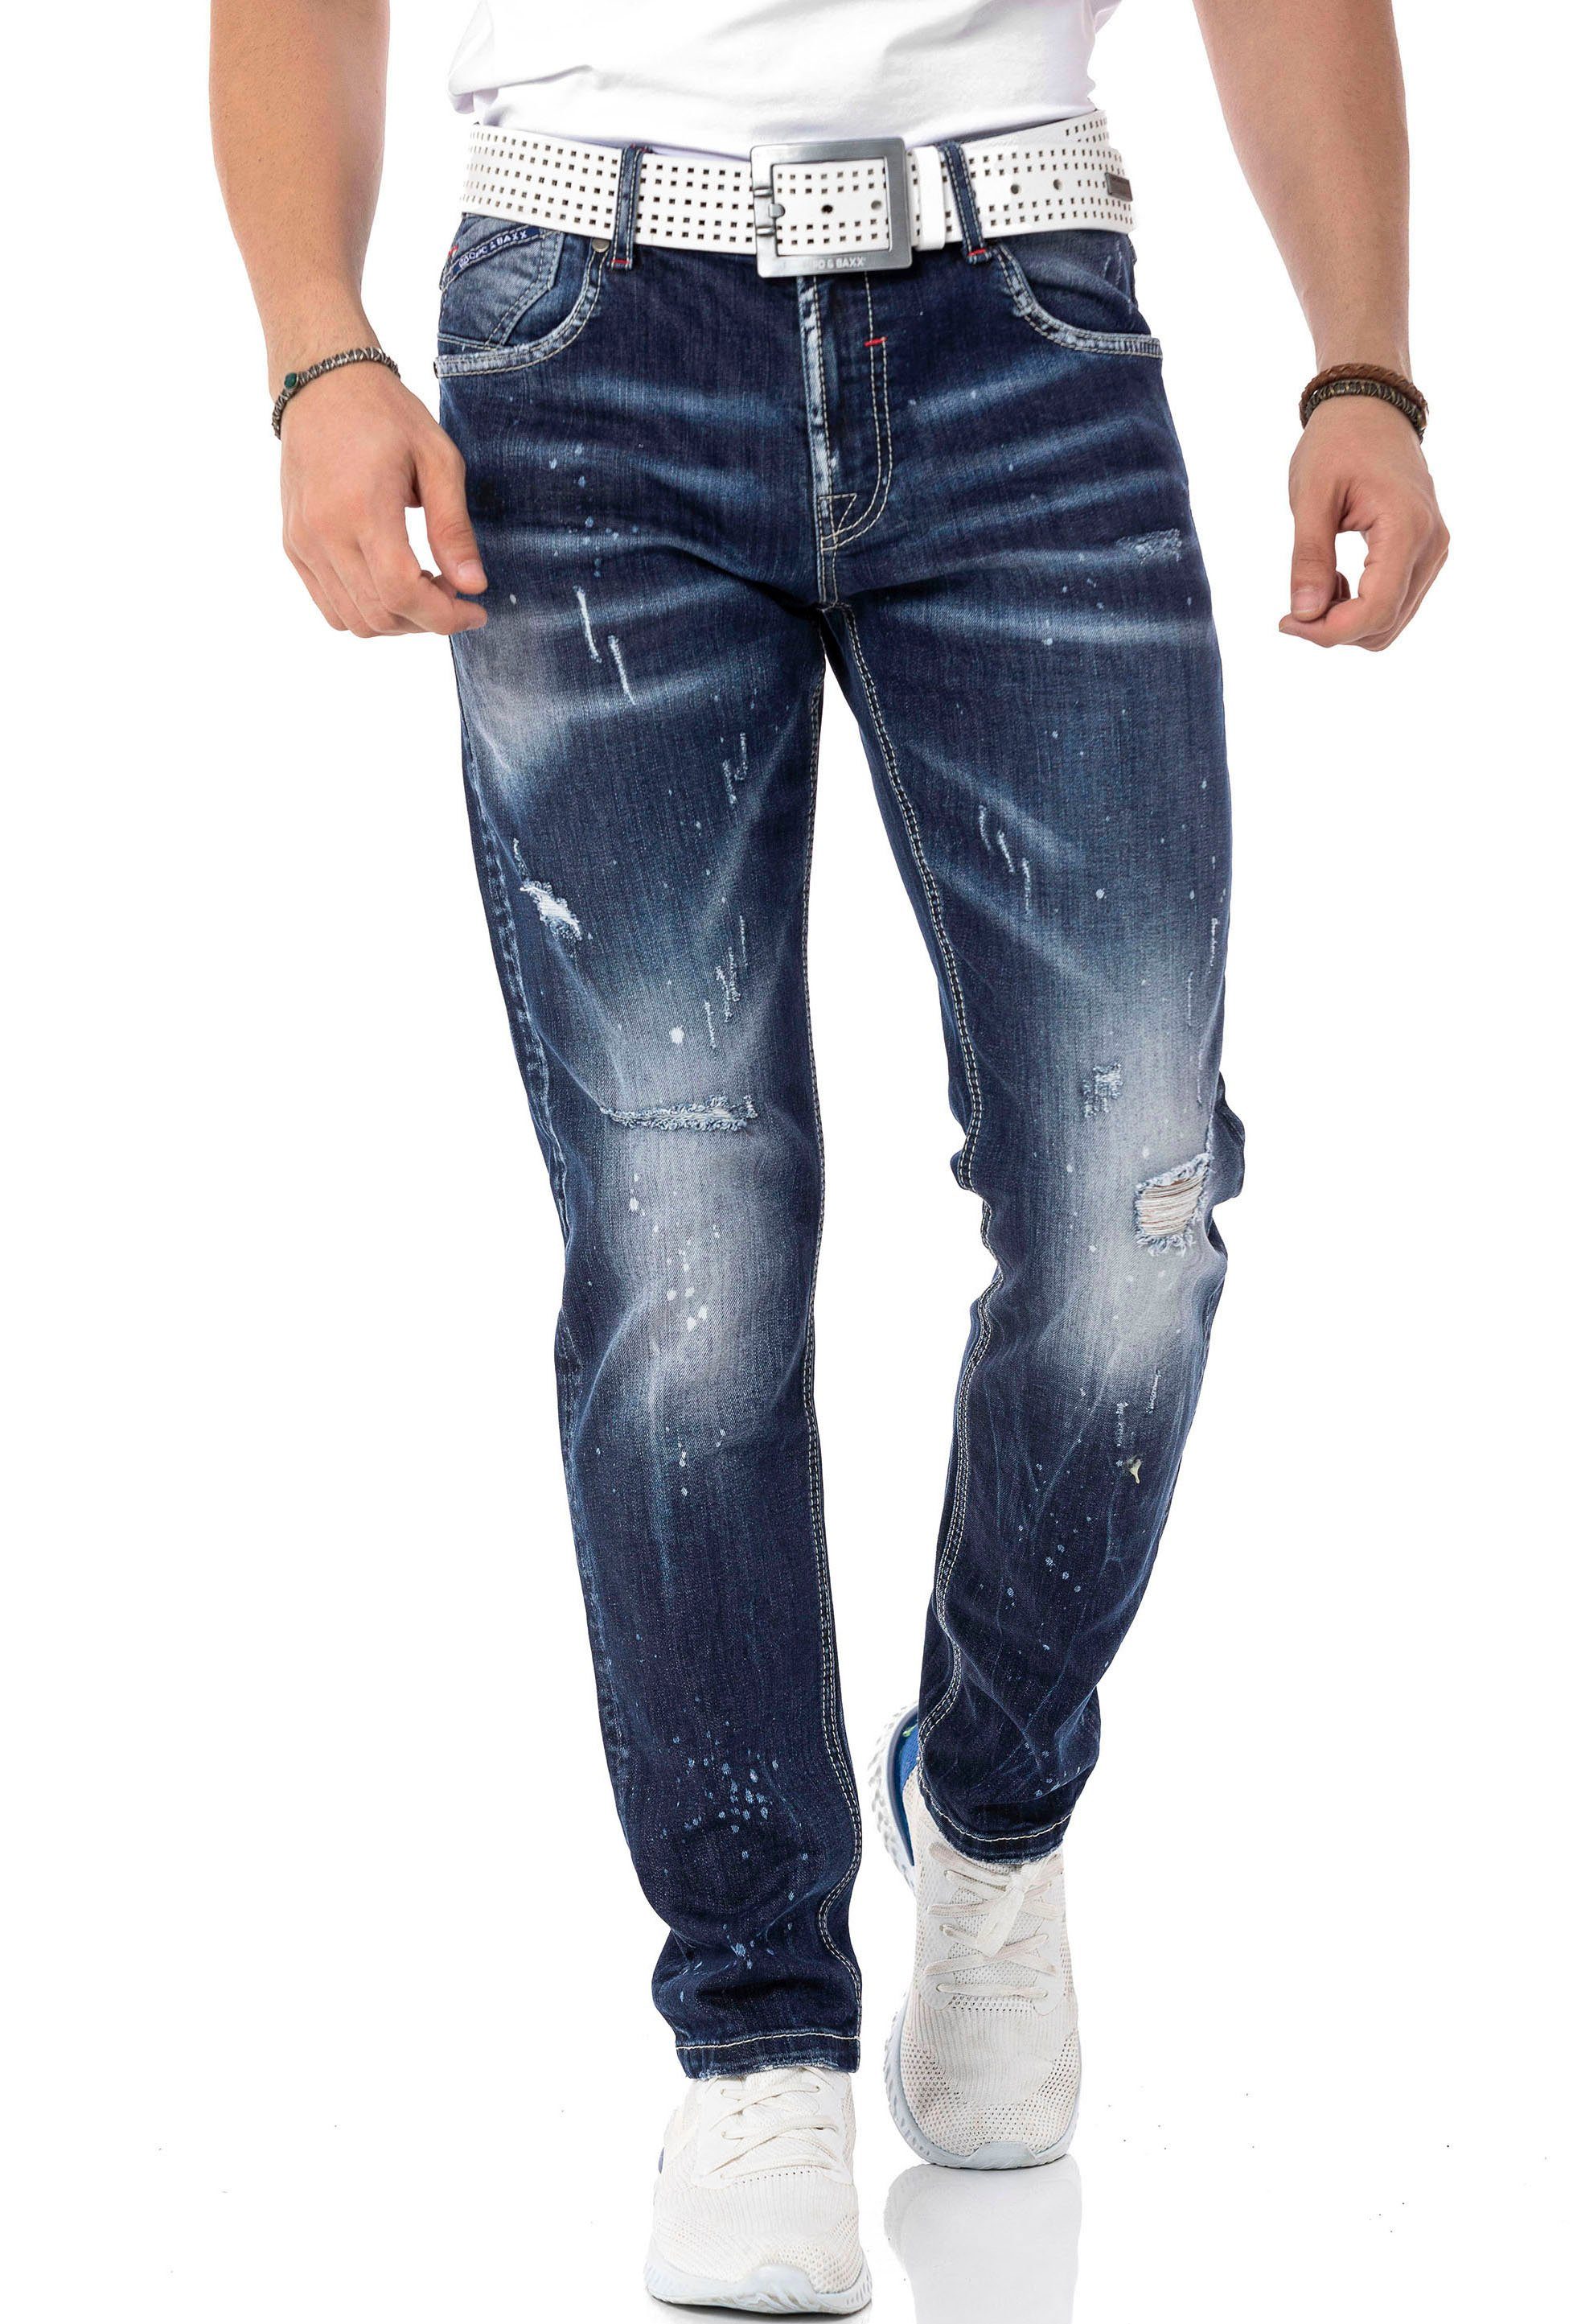 & Cipo Straight-Jeans Baxx